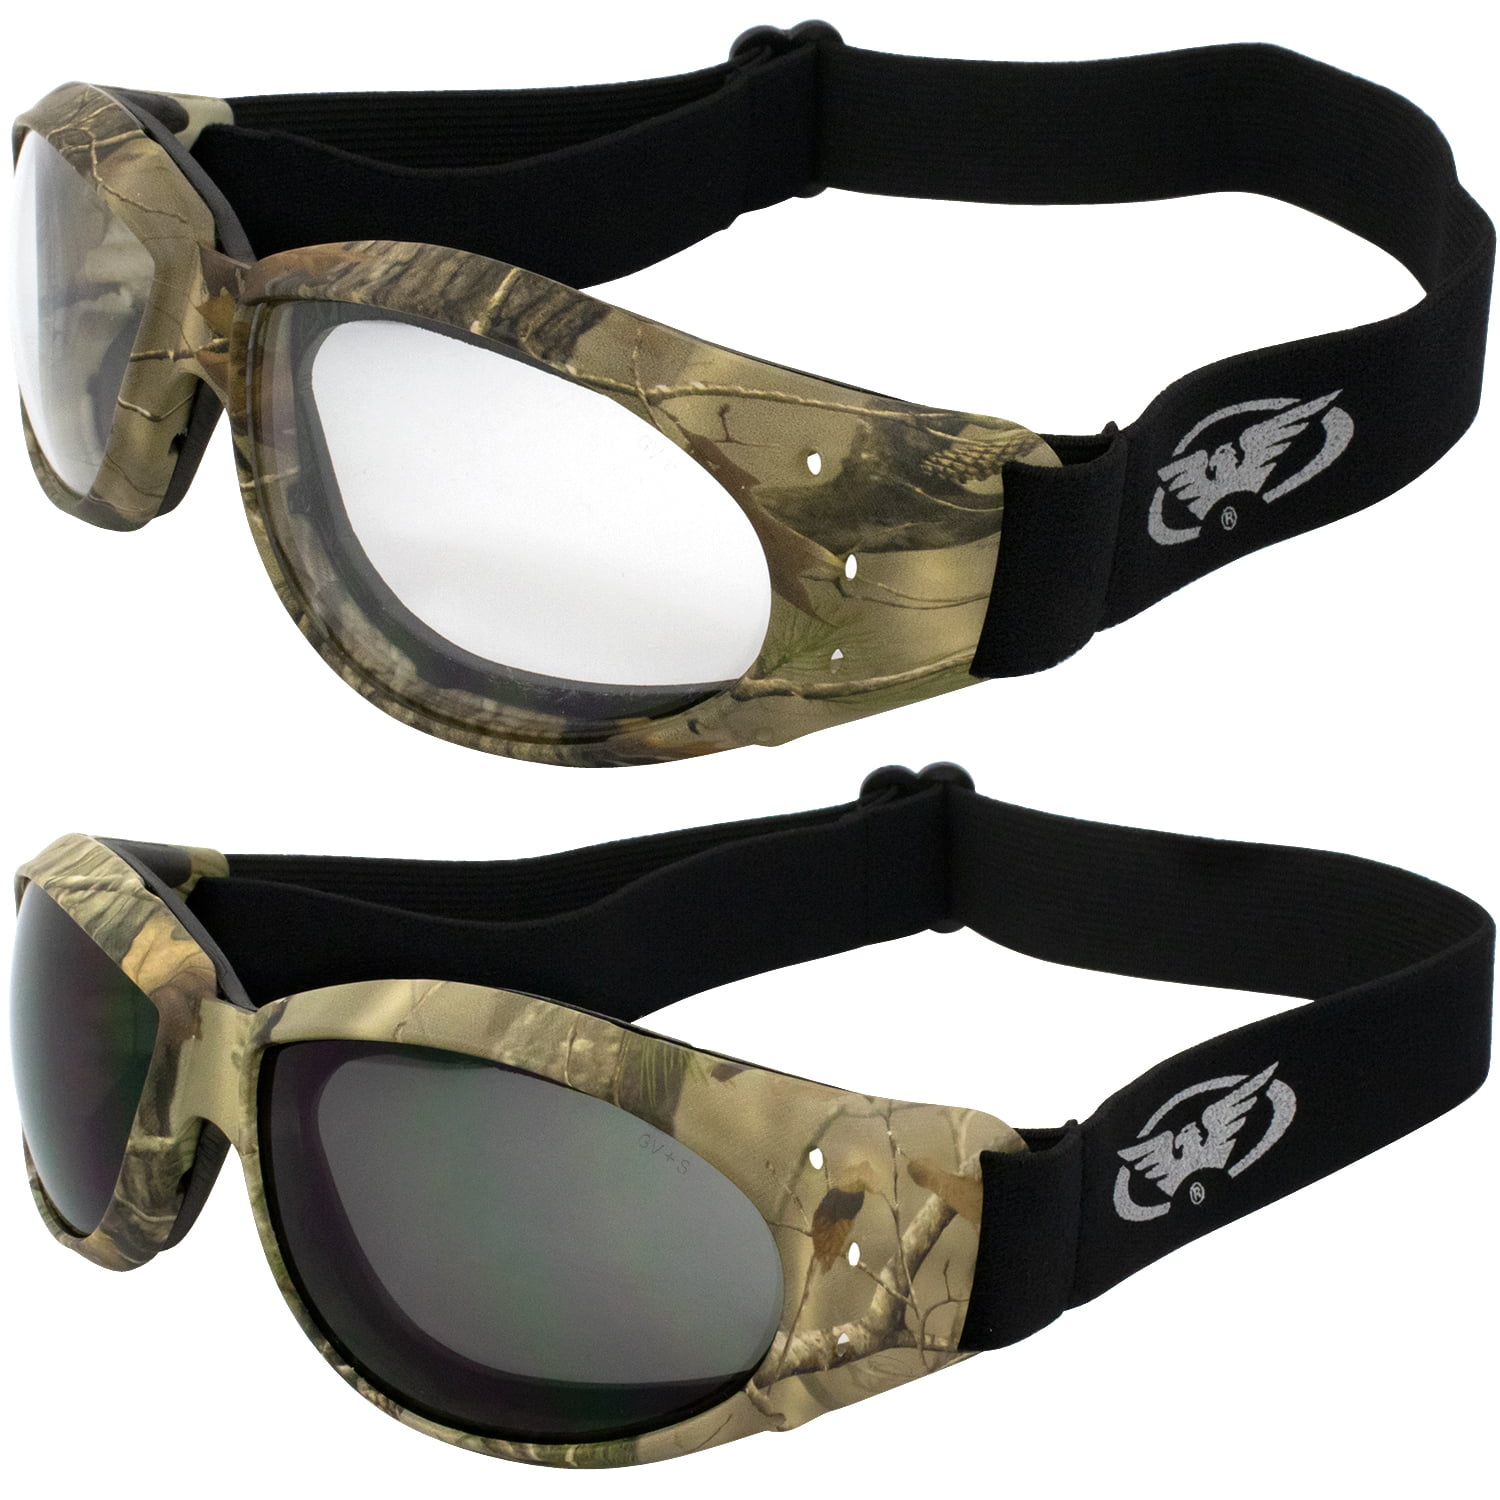 Shortwave 254nm Ultraviolet Light Eyes Protection Safety Glasses Goggles 